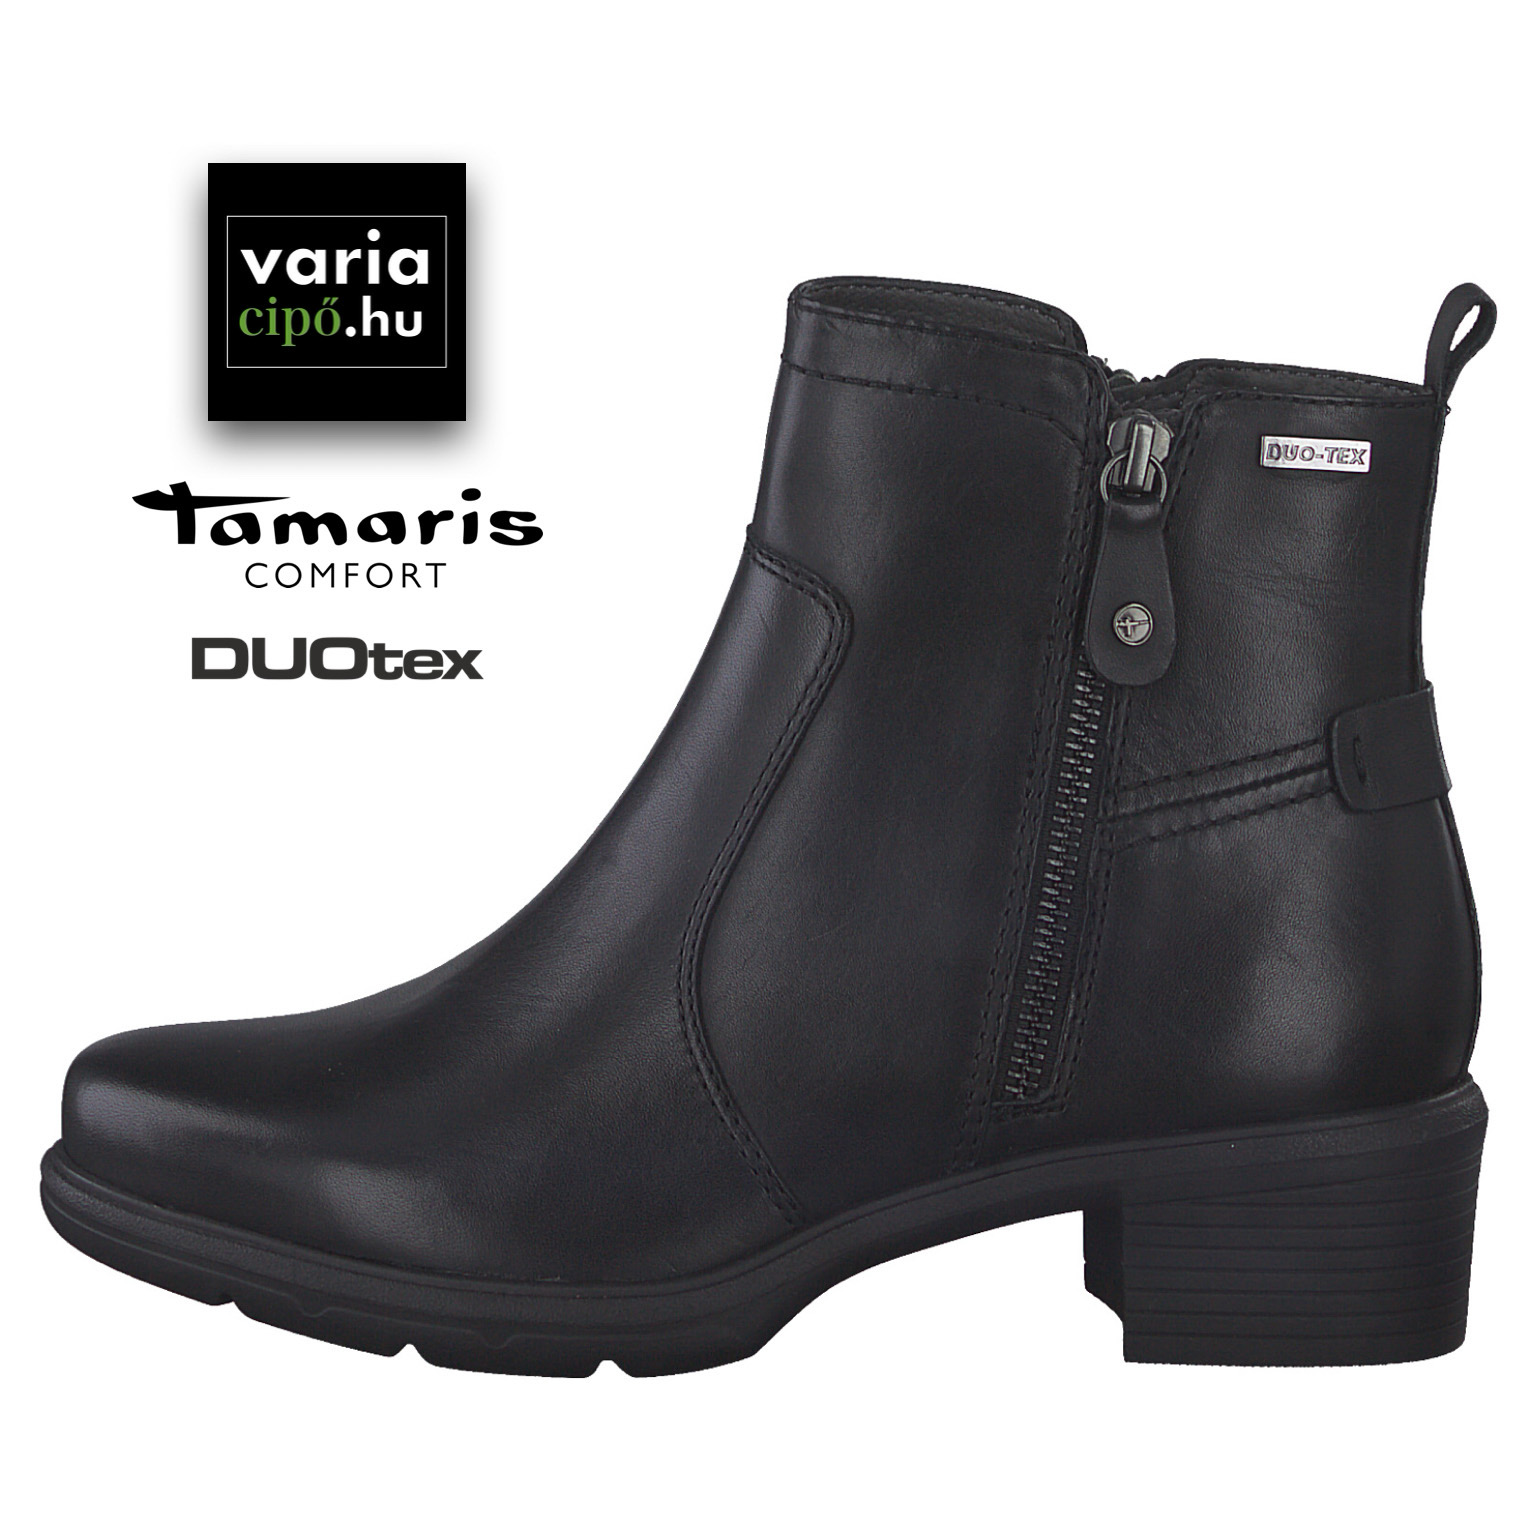 Tamaris Comfort fekete bokacsizma, 8-86300-29 001 black